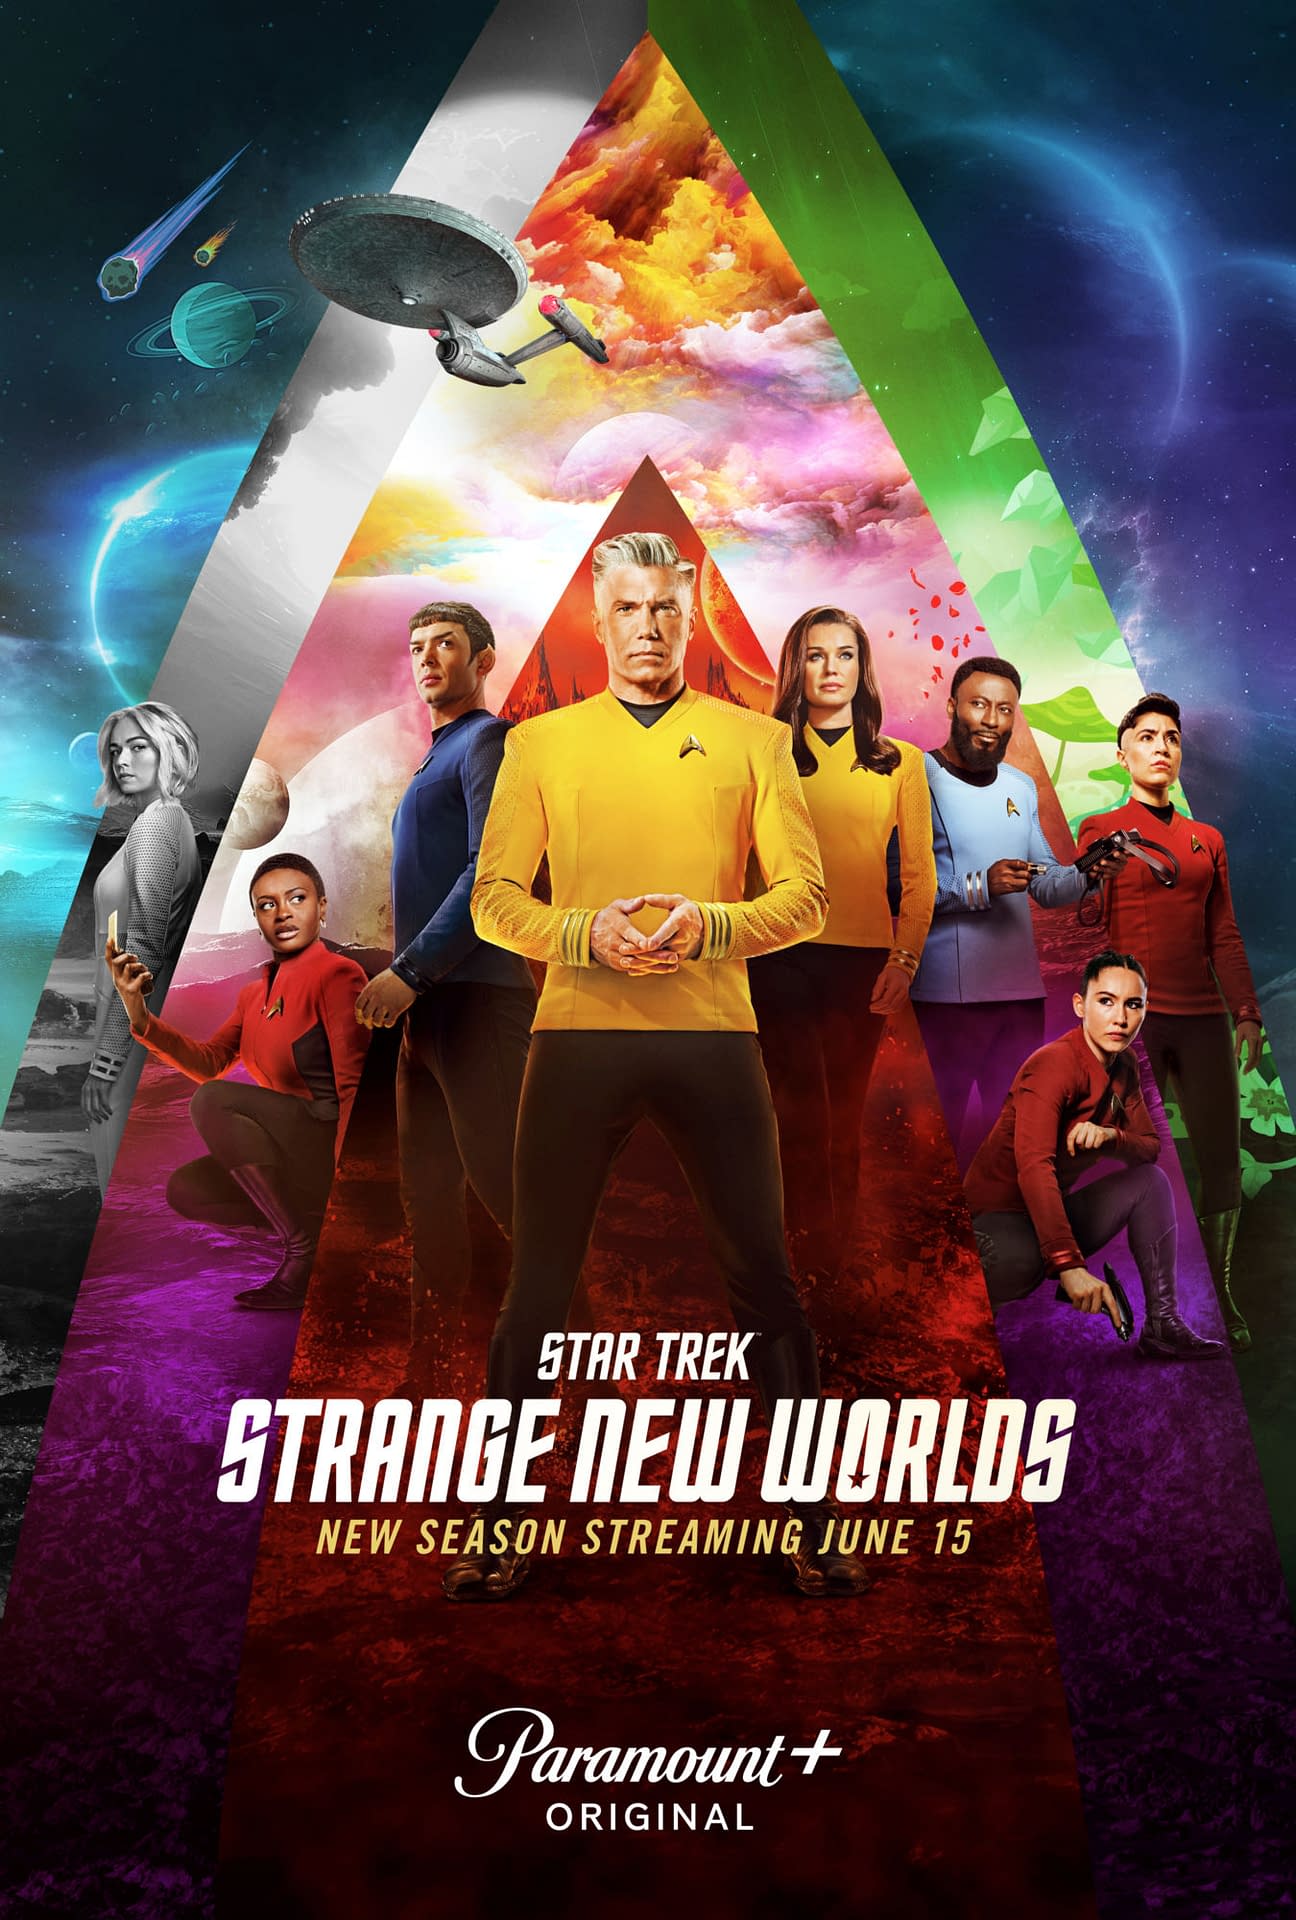 Star Trek: Strange New Worlds Season 2 Preview, BTS Look Released